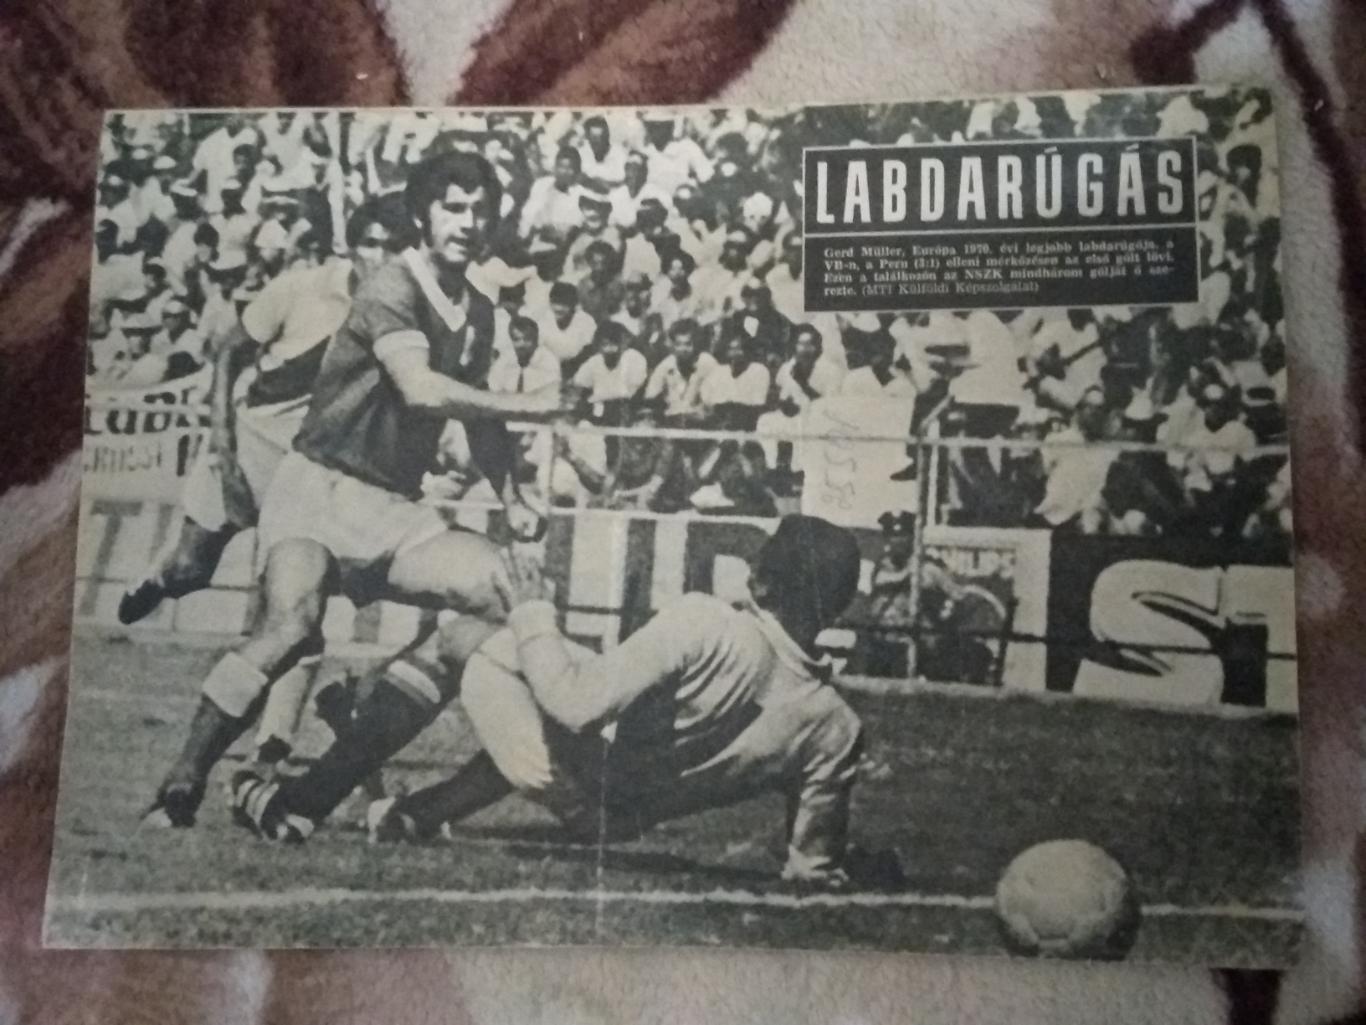 Журнал.Футбол.Лабдаругаш № 1 1971 г. (Венгрия). 3